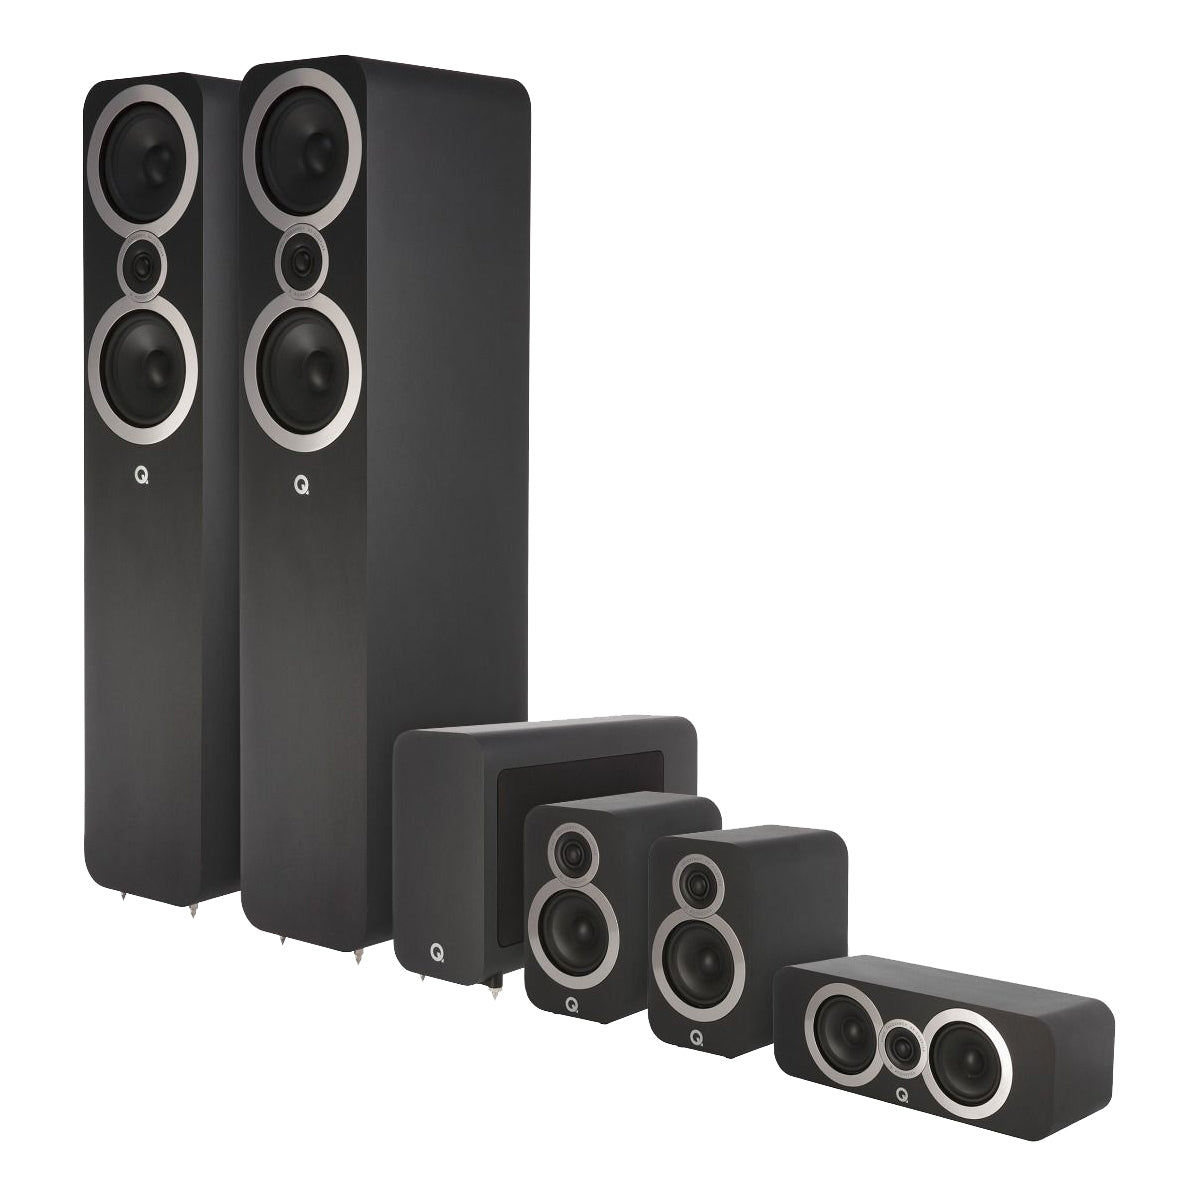 Q Acoustics 3000i 5.1 (3050i) Home Theater Speaker Package